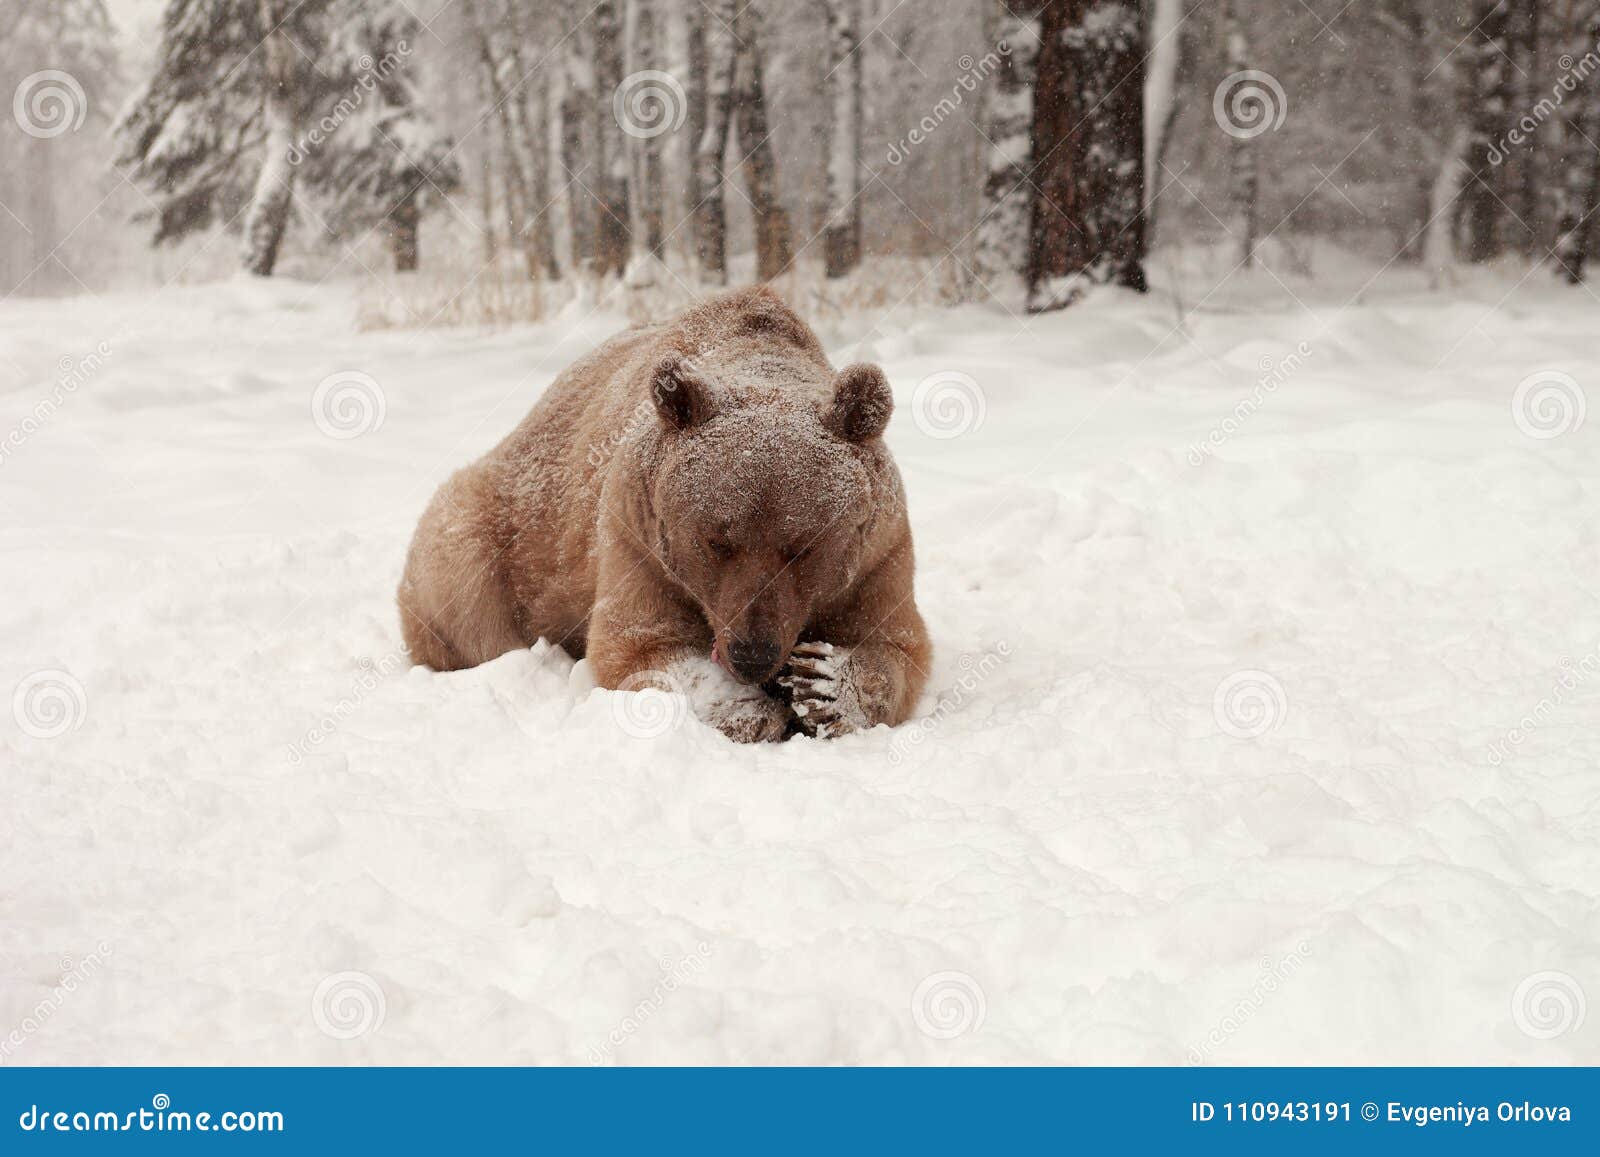 european brown bear in a winter forest